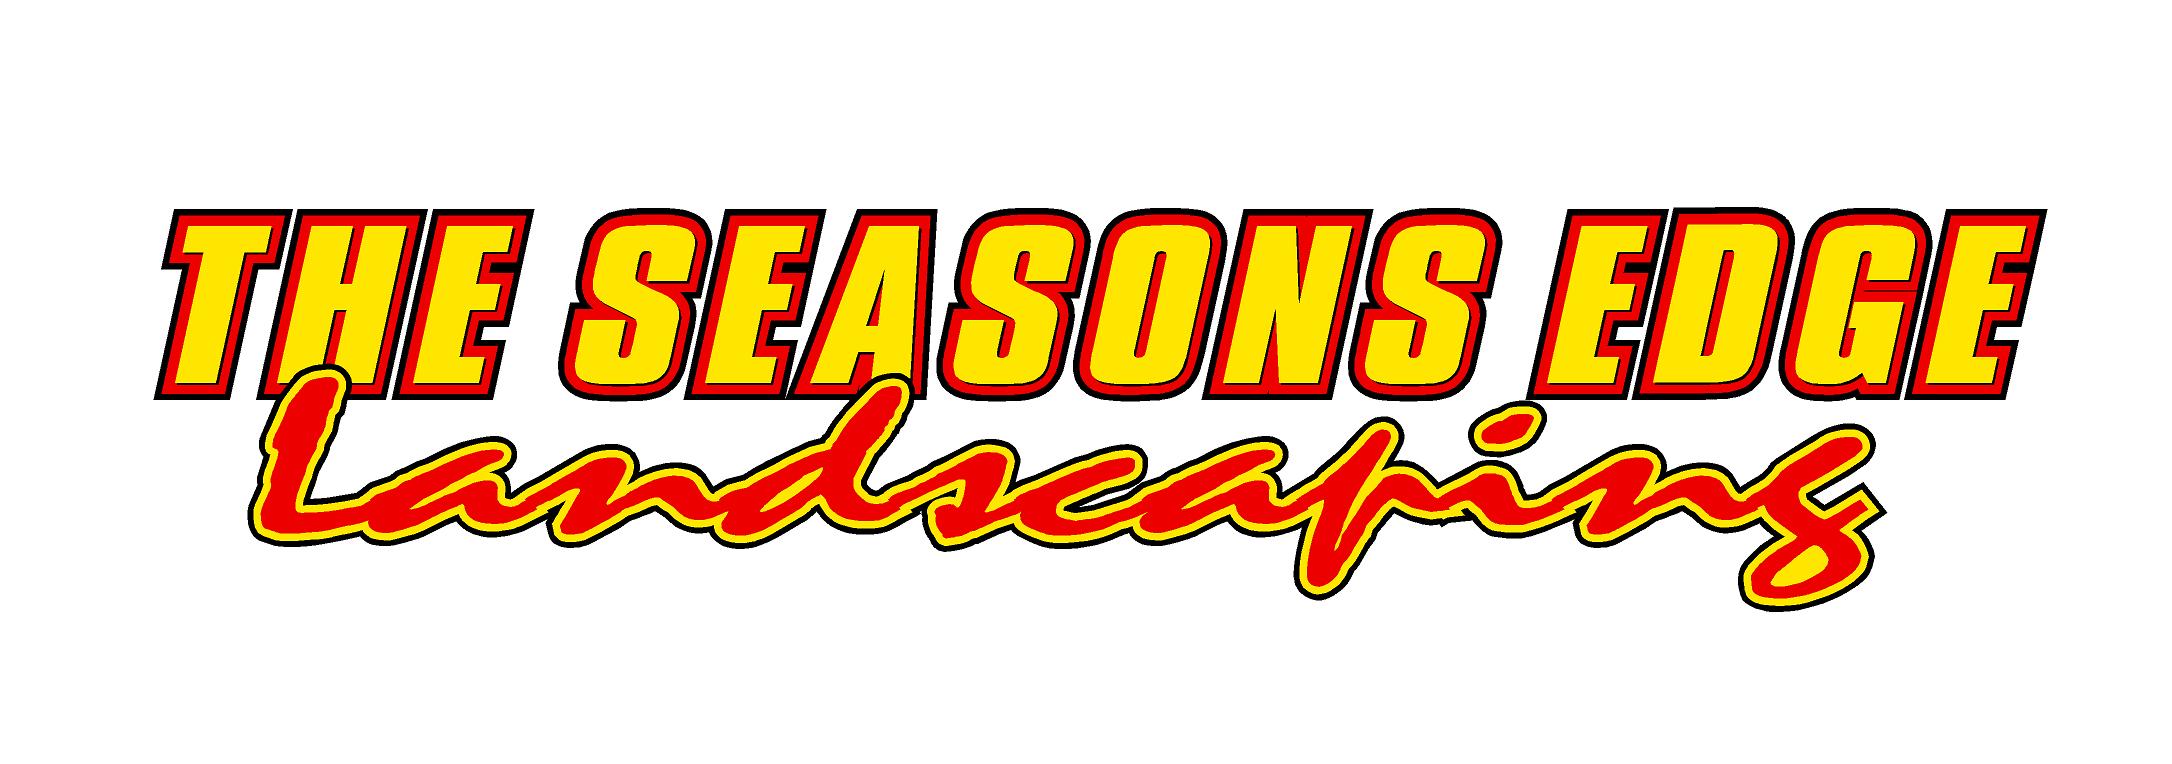 The Seasons Edge Landscaping, Inc. Logo